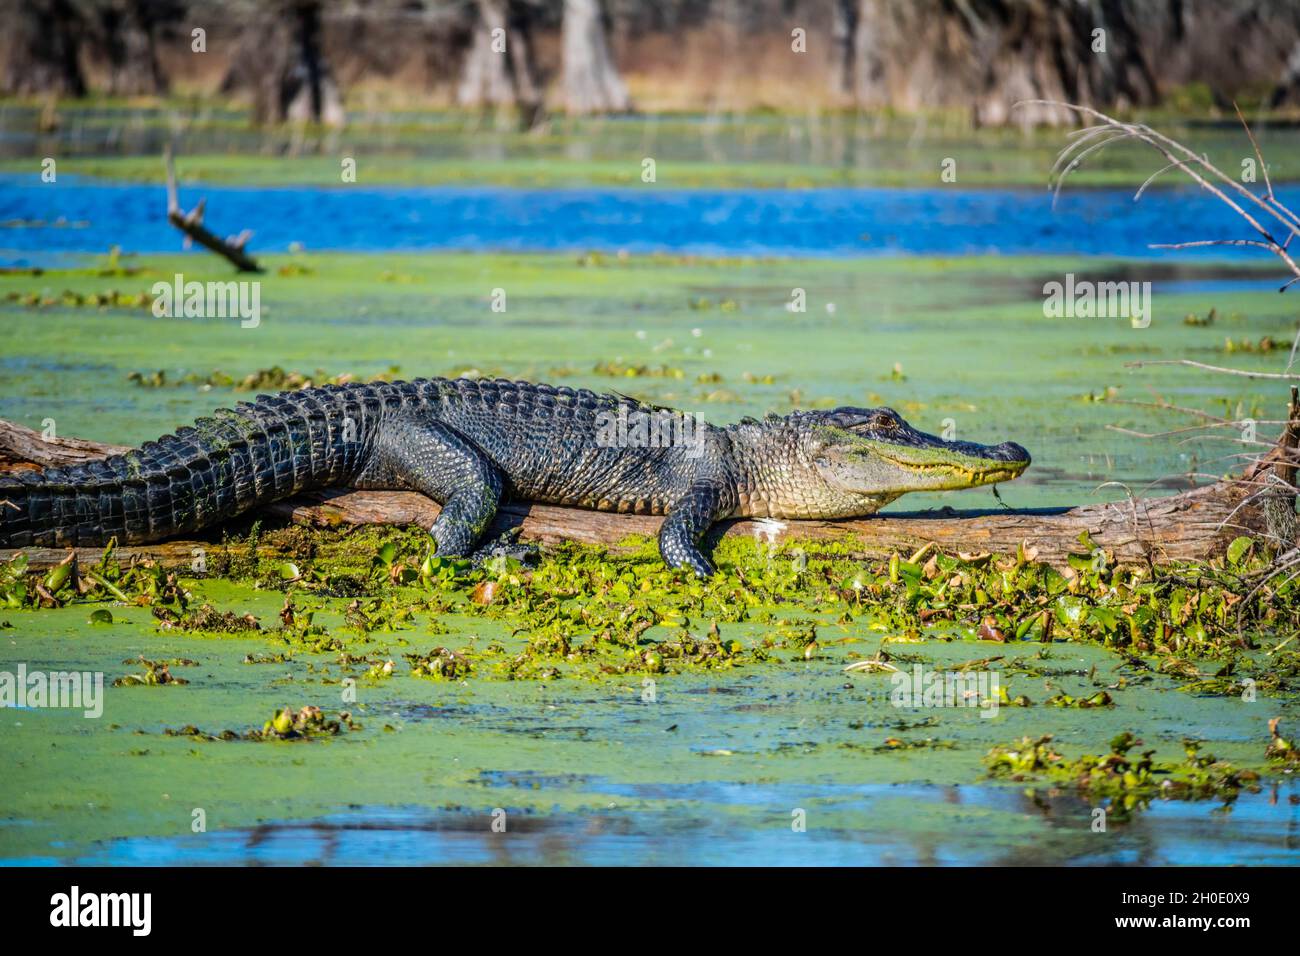 Swamp Tour & Alligator Wrangling